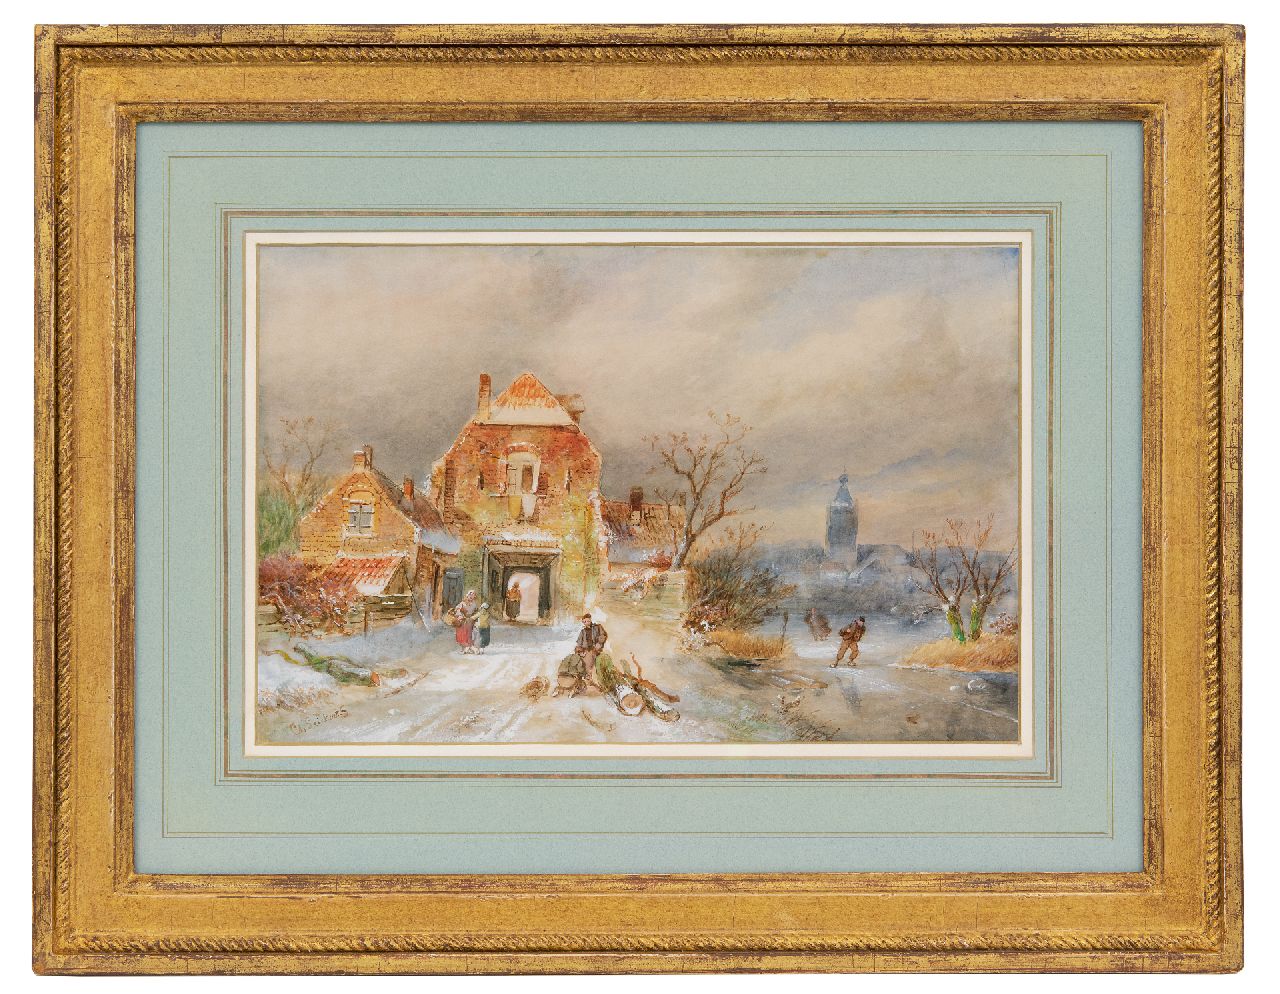 Leickert C.H.J.  | 'Charles' Henri Joseph Leickert, Winters dorpsgezicht met schaatsers, aquarel op papier 23,1 x 34,8 cm, gesigneerd linksonder